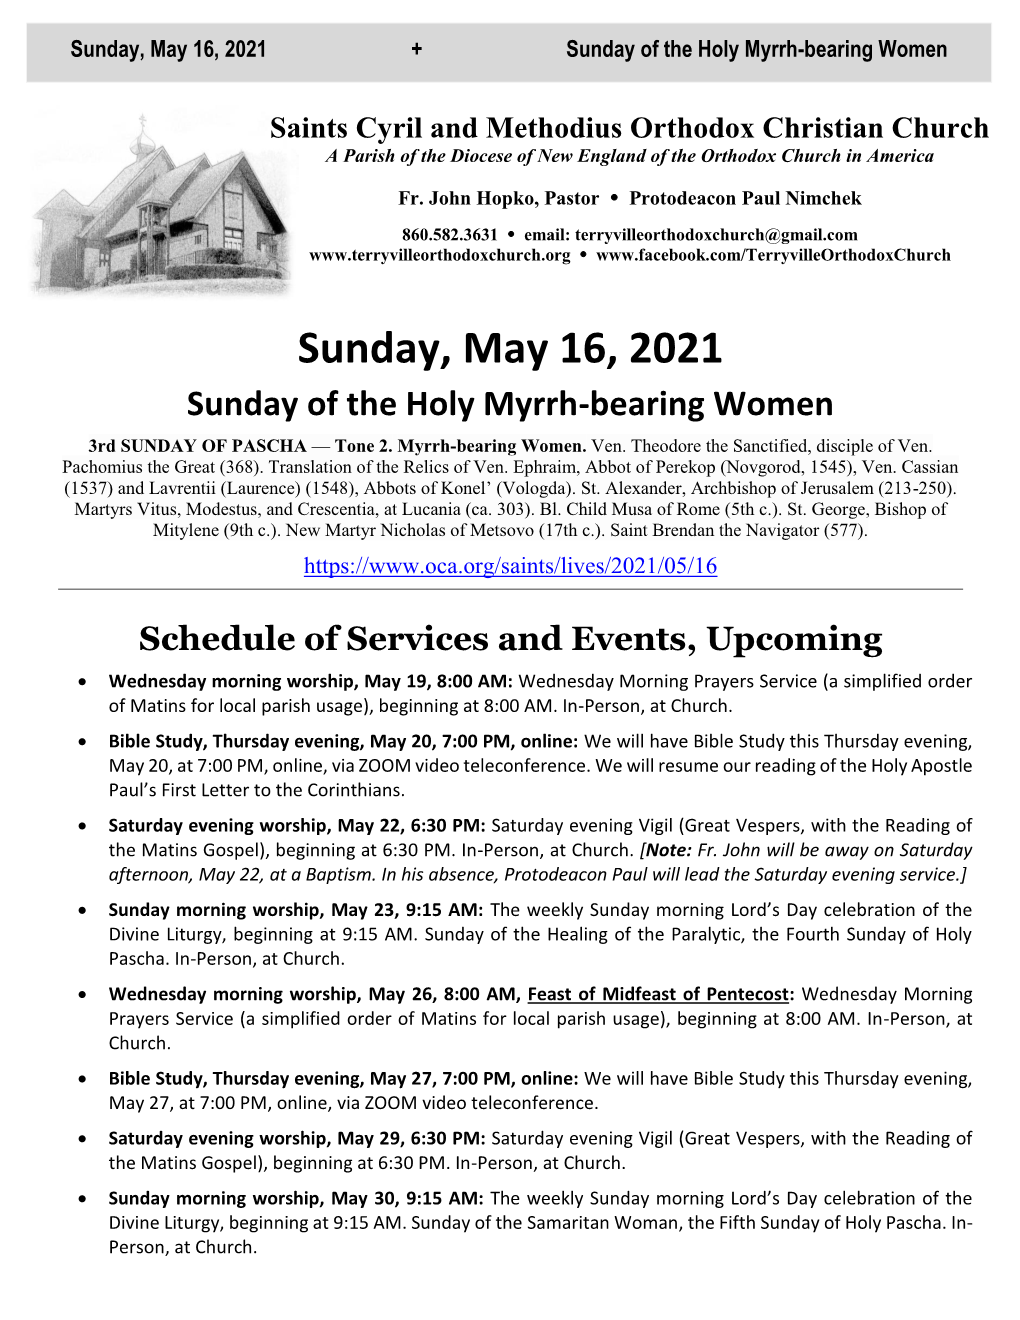 Parish Bulletin -- May 16, 2021